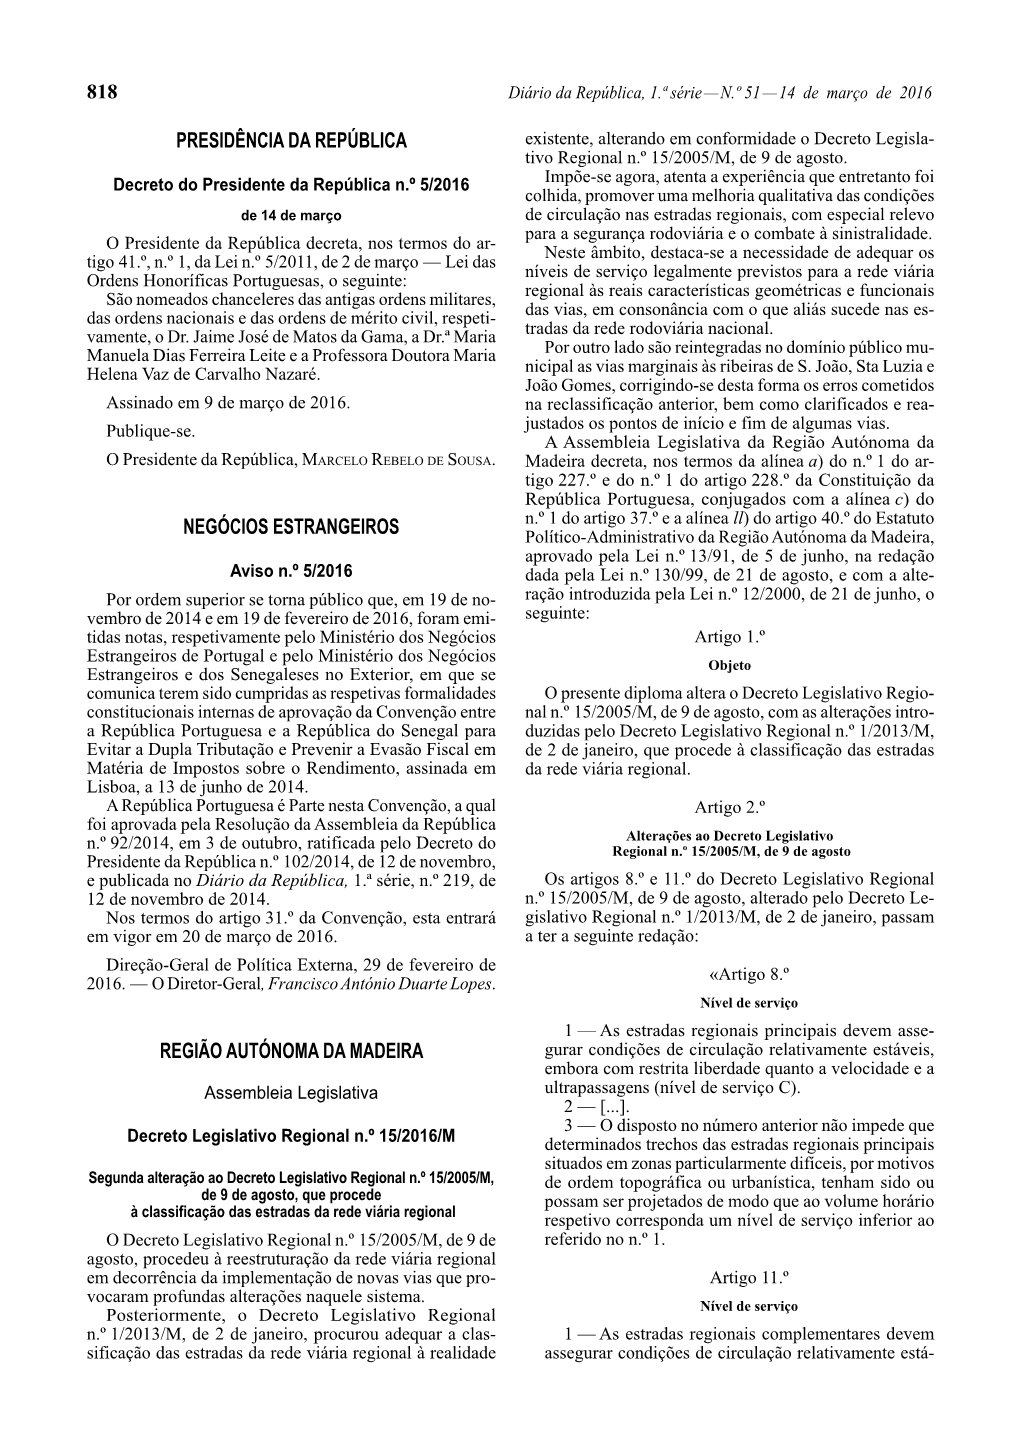 Decreto Legislativo Regional N.º 15/2016/M